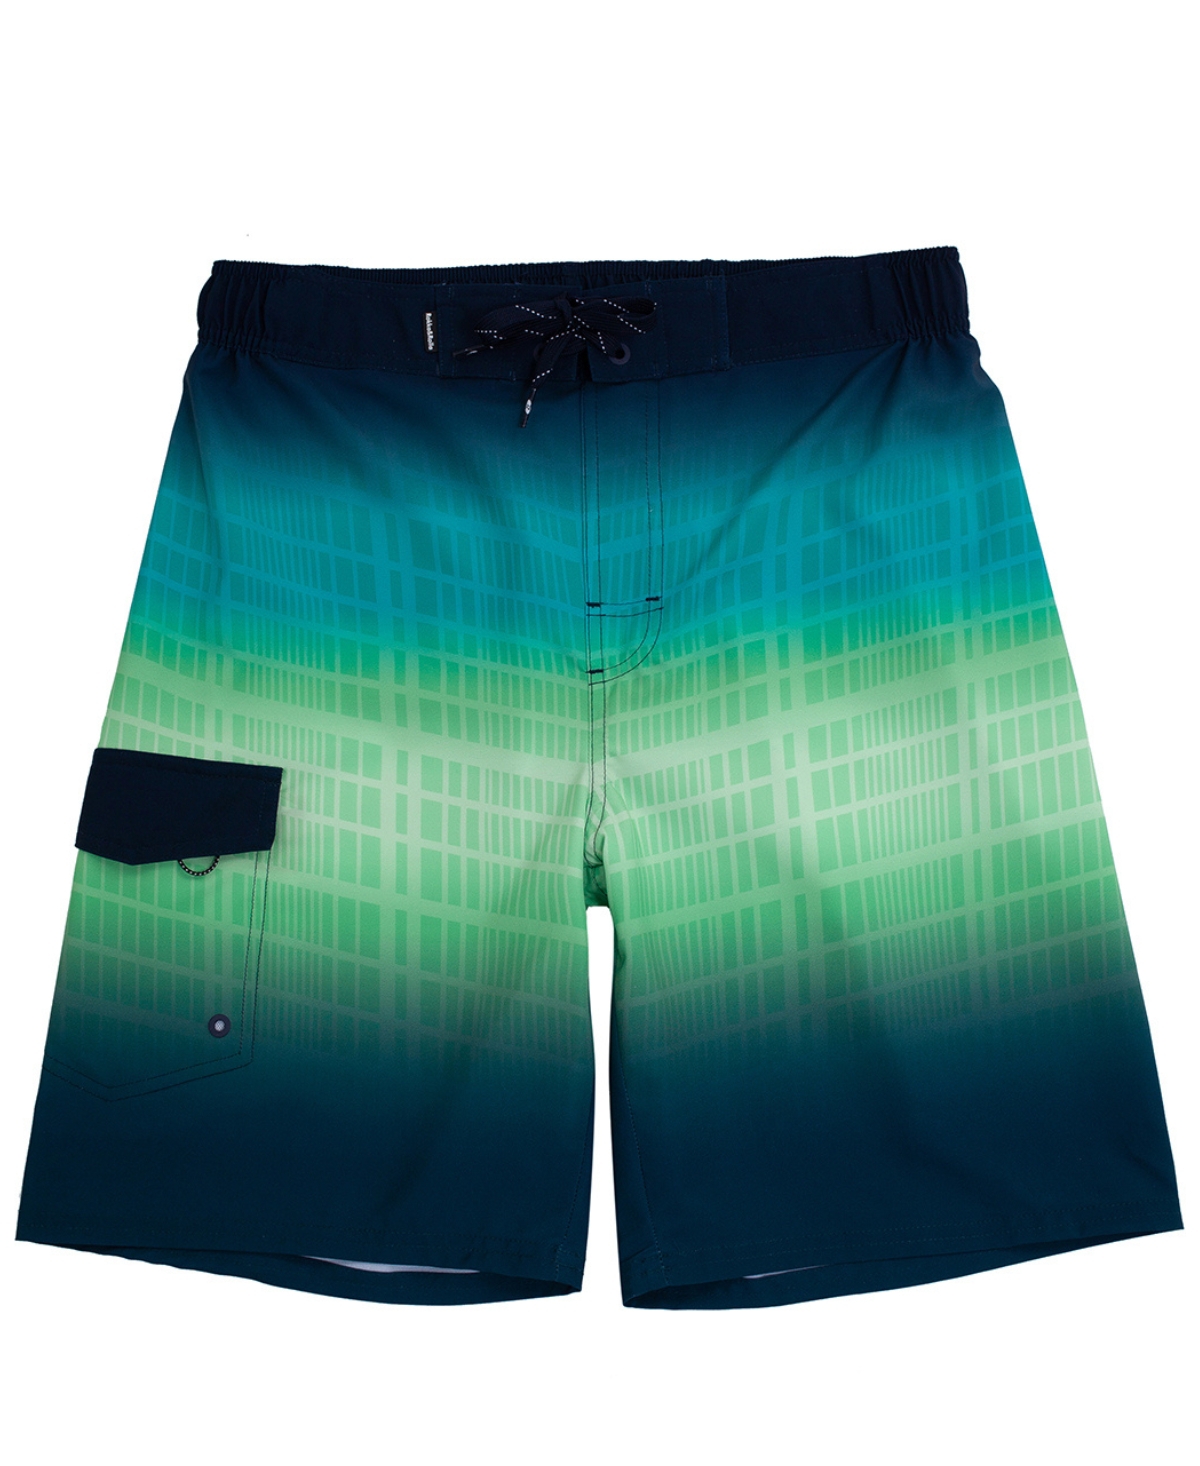 Men's 9" No Liner Board Shorts Elastic Waist Quick Dry Swim Trunks - Summer paradise